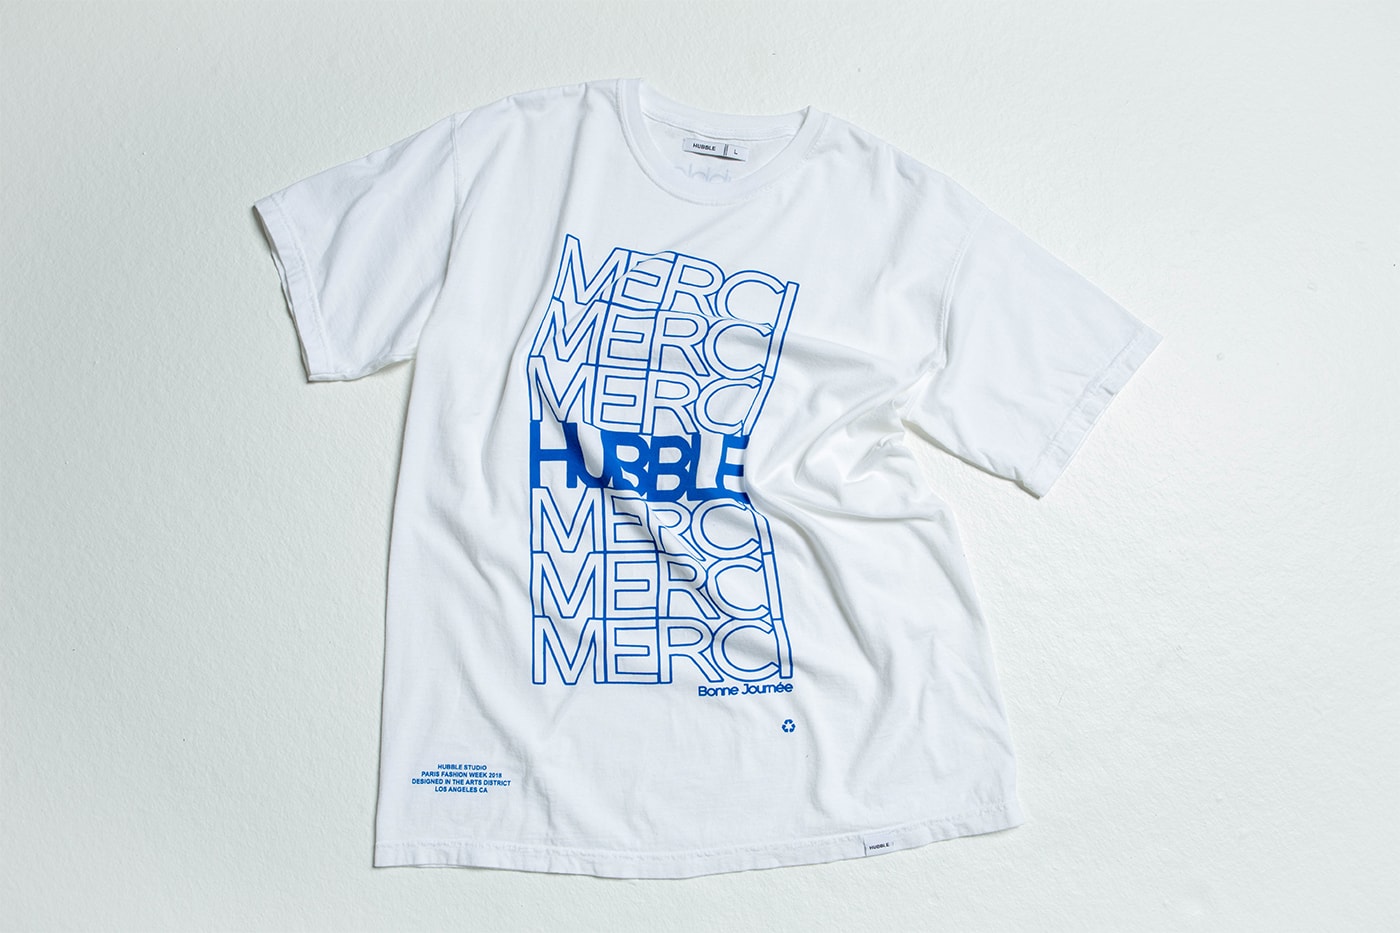 Hubble Studio Paris Fashion Week Merci T-Shirt white blue release info colette